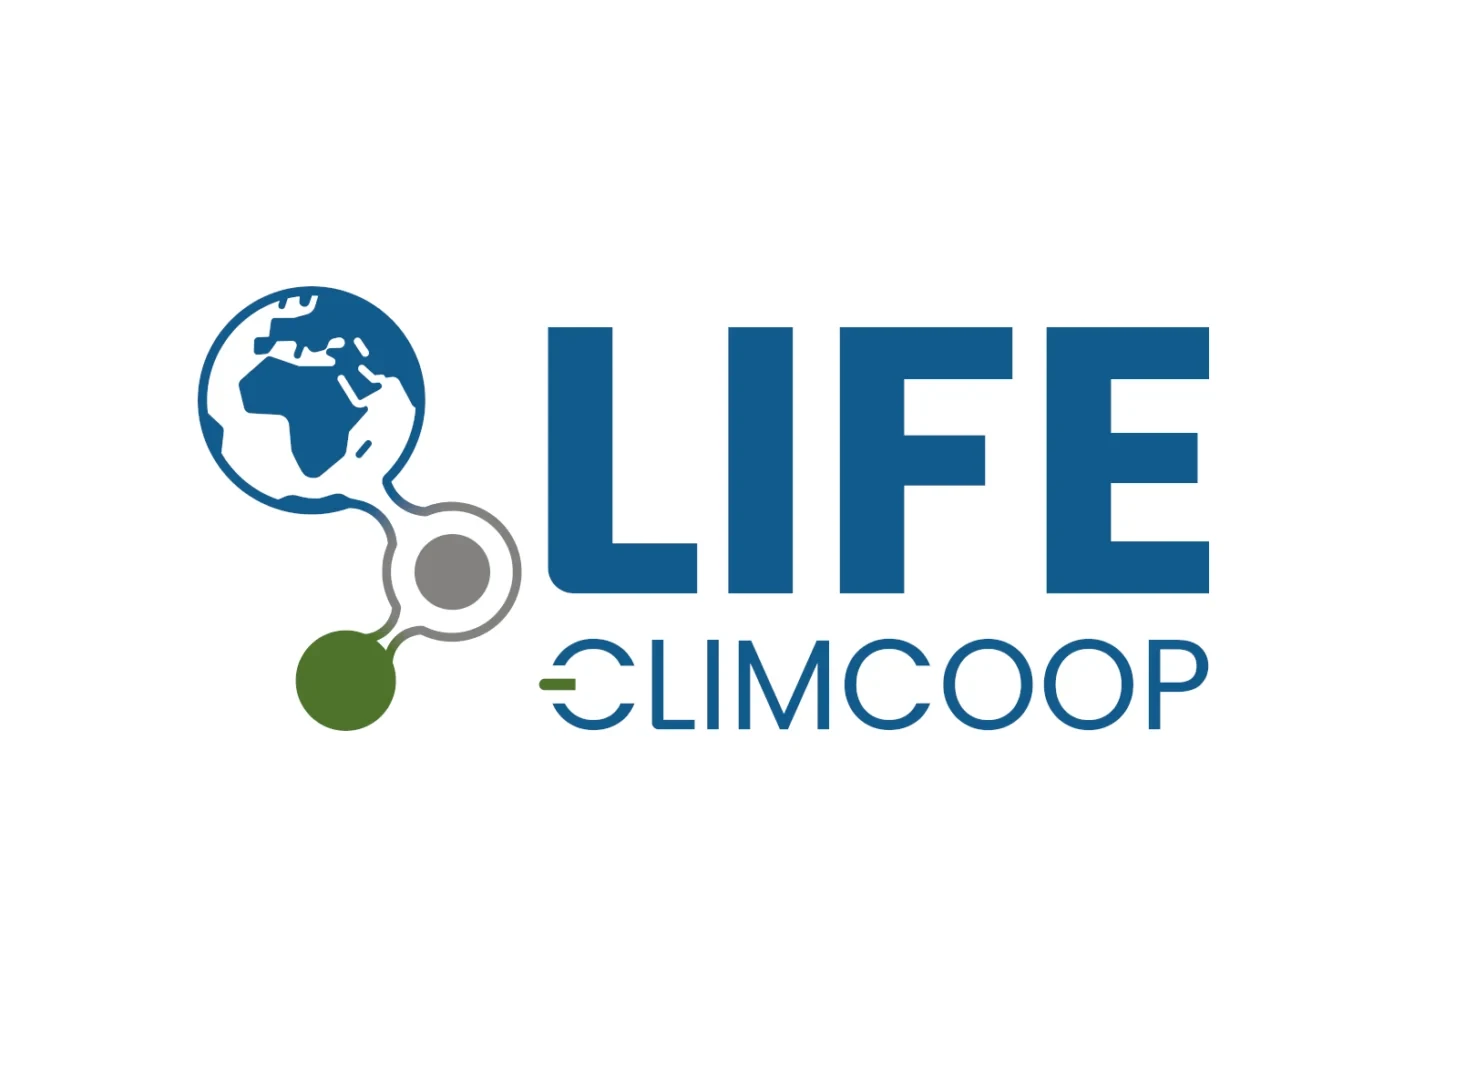 climcoop logo